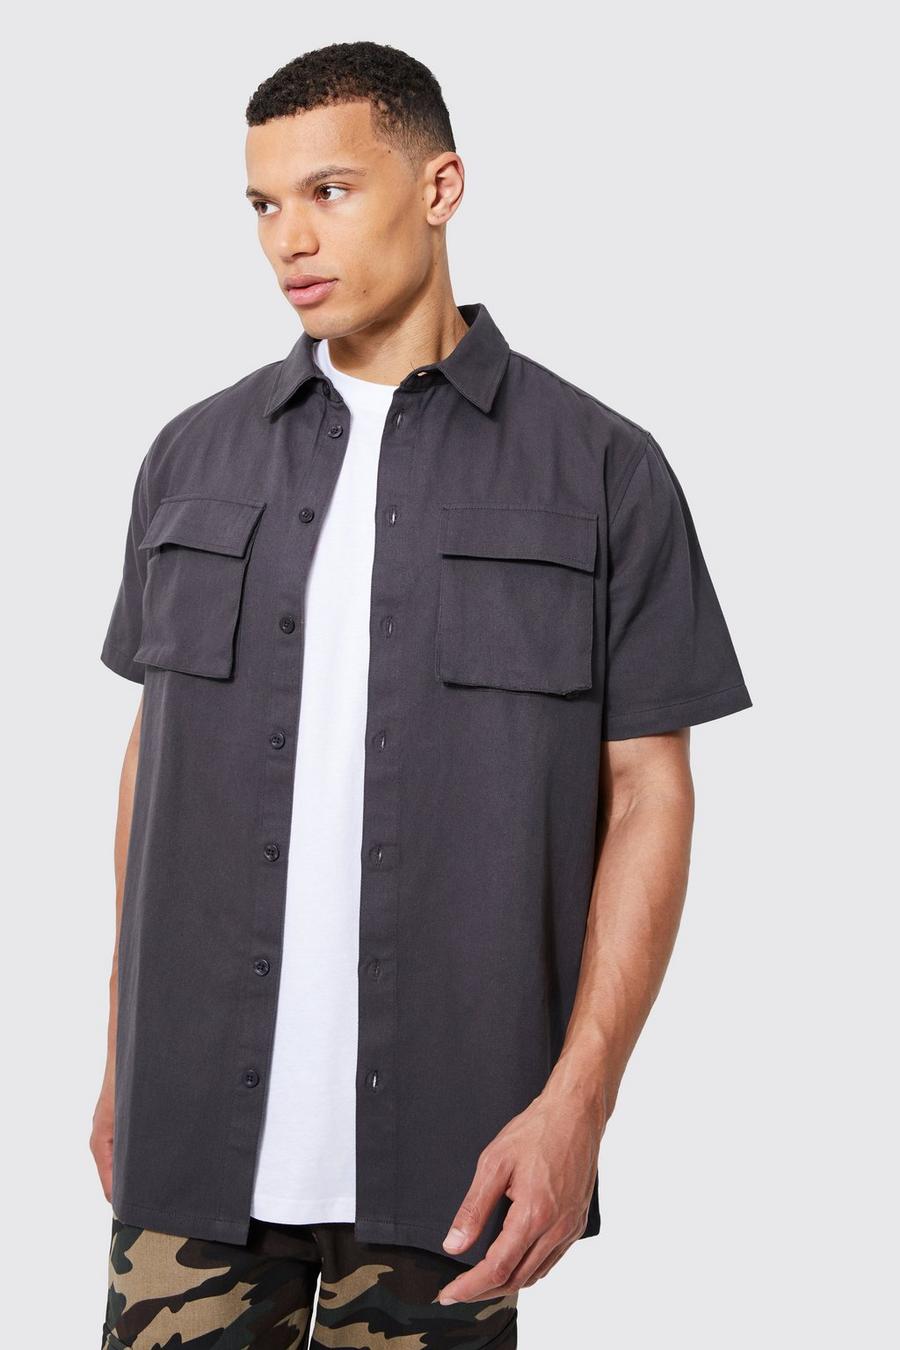 Charcoal Tall Short Sleeve Overshirt Utility Shirt image number 1